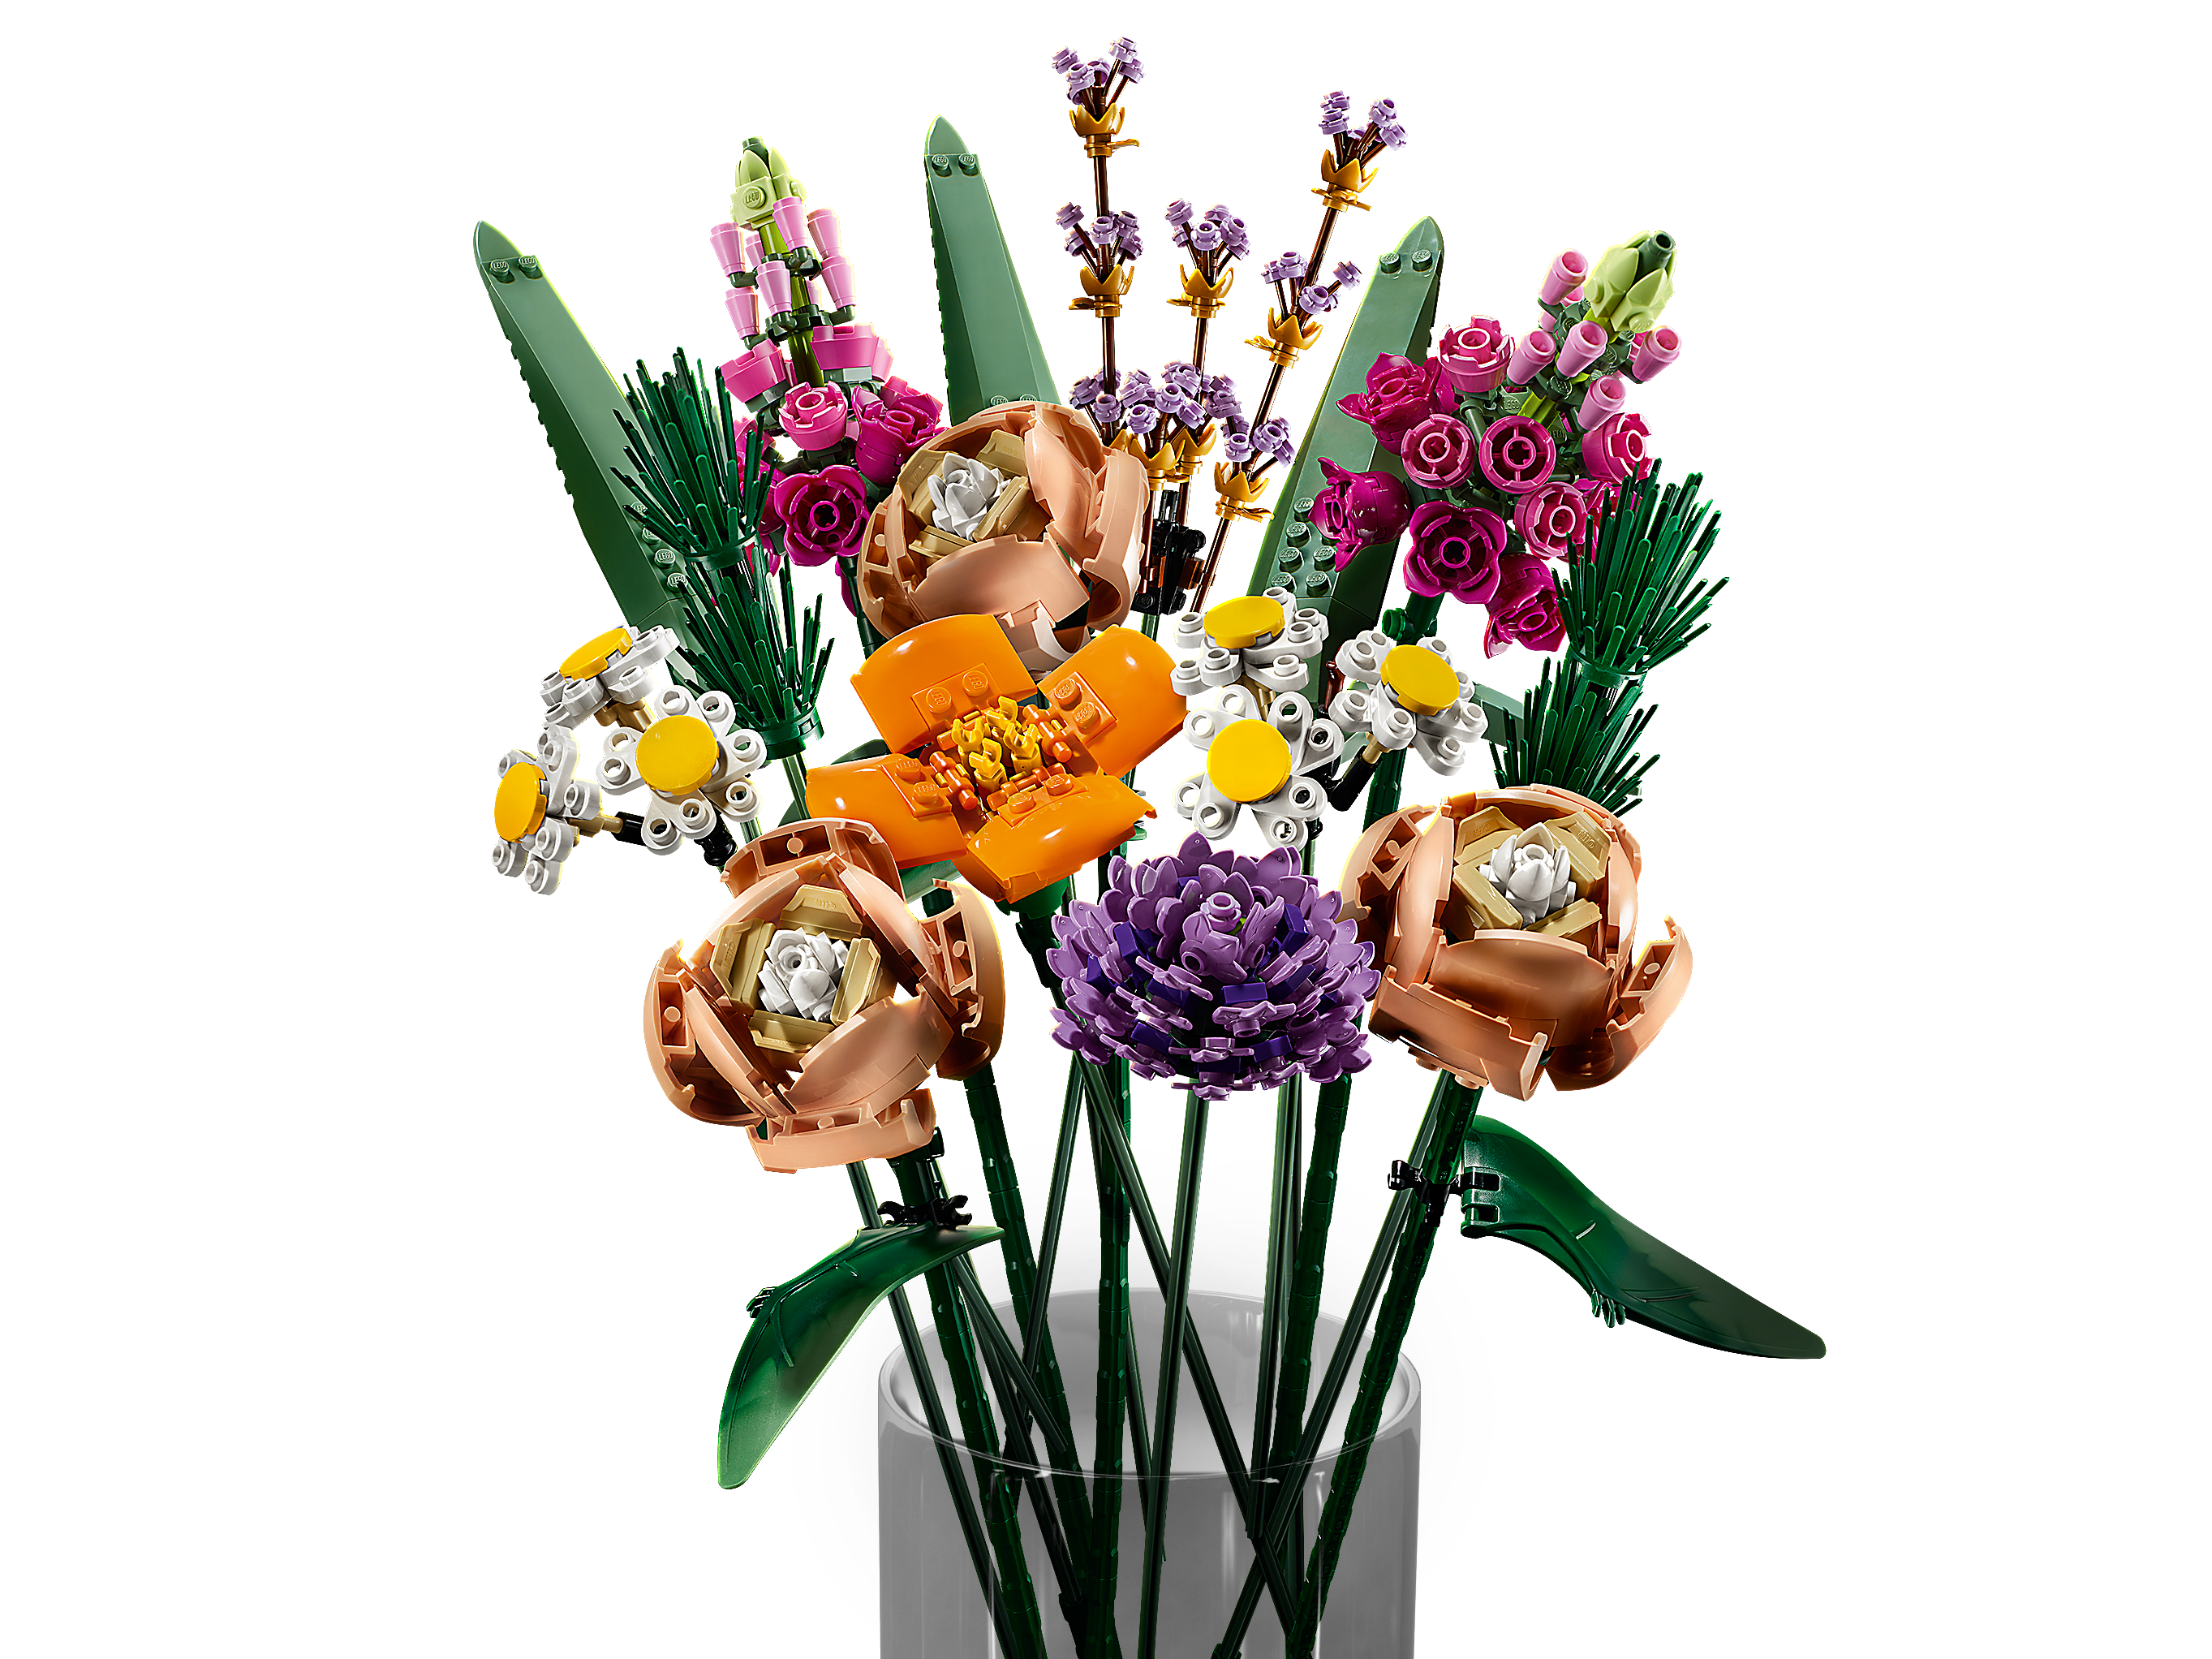 LEGO Icons 10313 Bouquet Fiori Selvatici Finti con Papaveri e Lavanda  Artificiali, Idea Regalo Adulti, Botanical Collection - LEGO - LEL Flowers  - Set mattoncini - Giocattoli